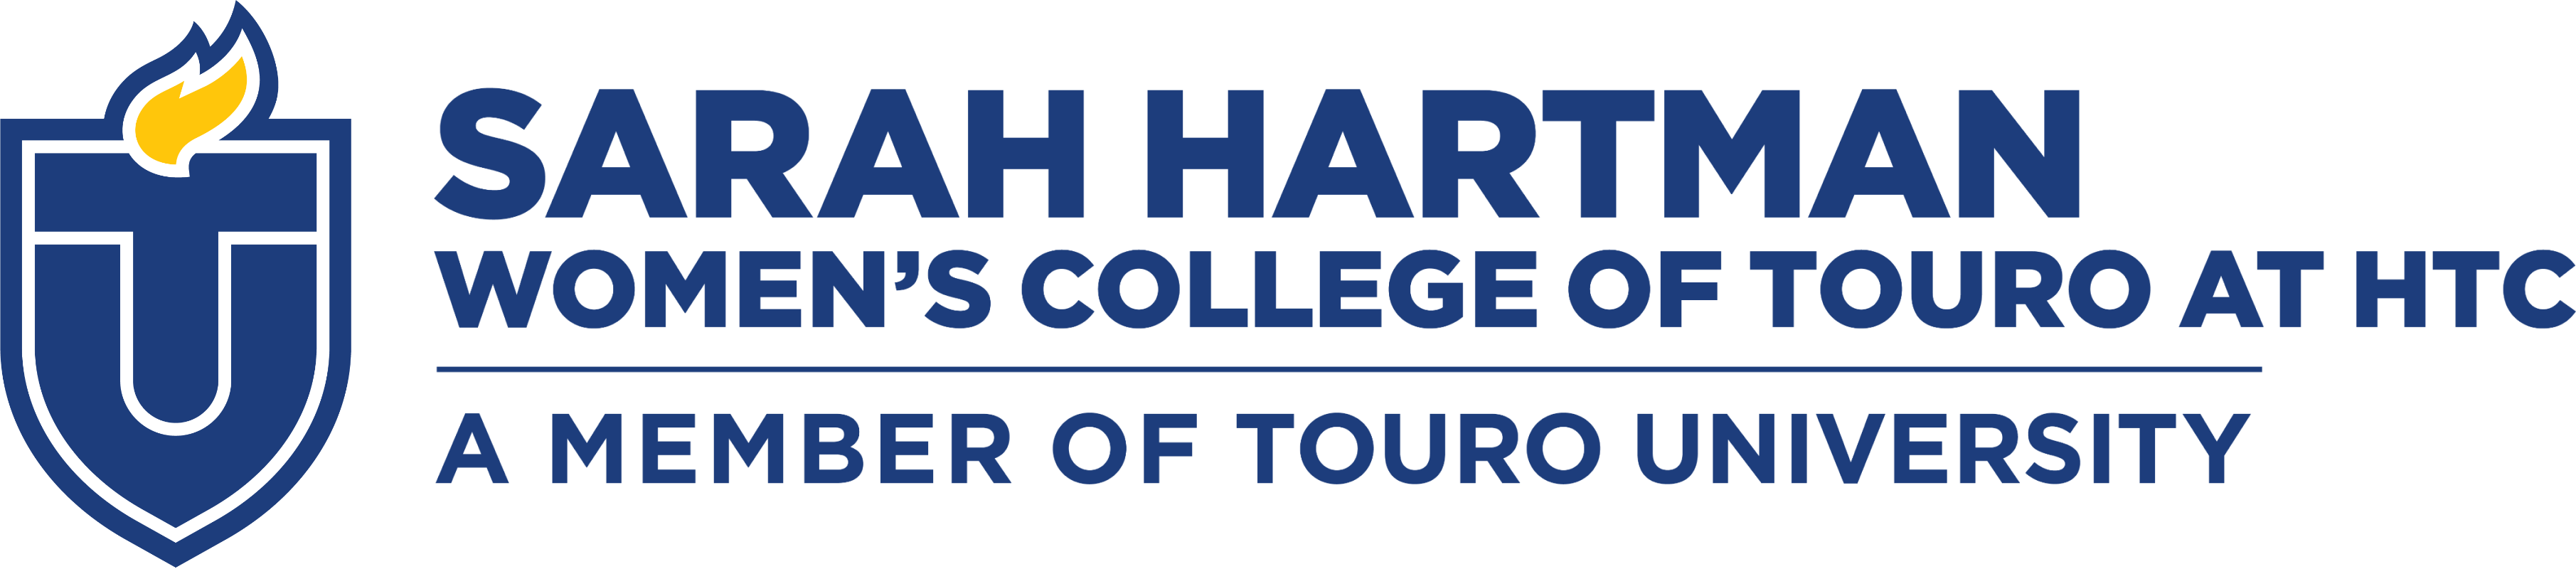 Sarah Hartman Women's College of Touro at HTC: A member of Touro University